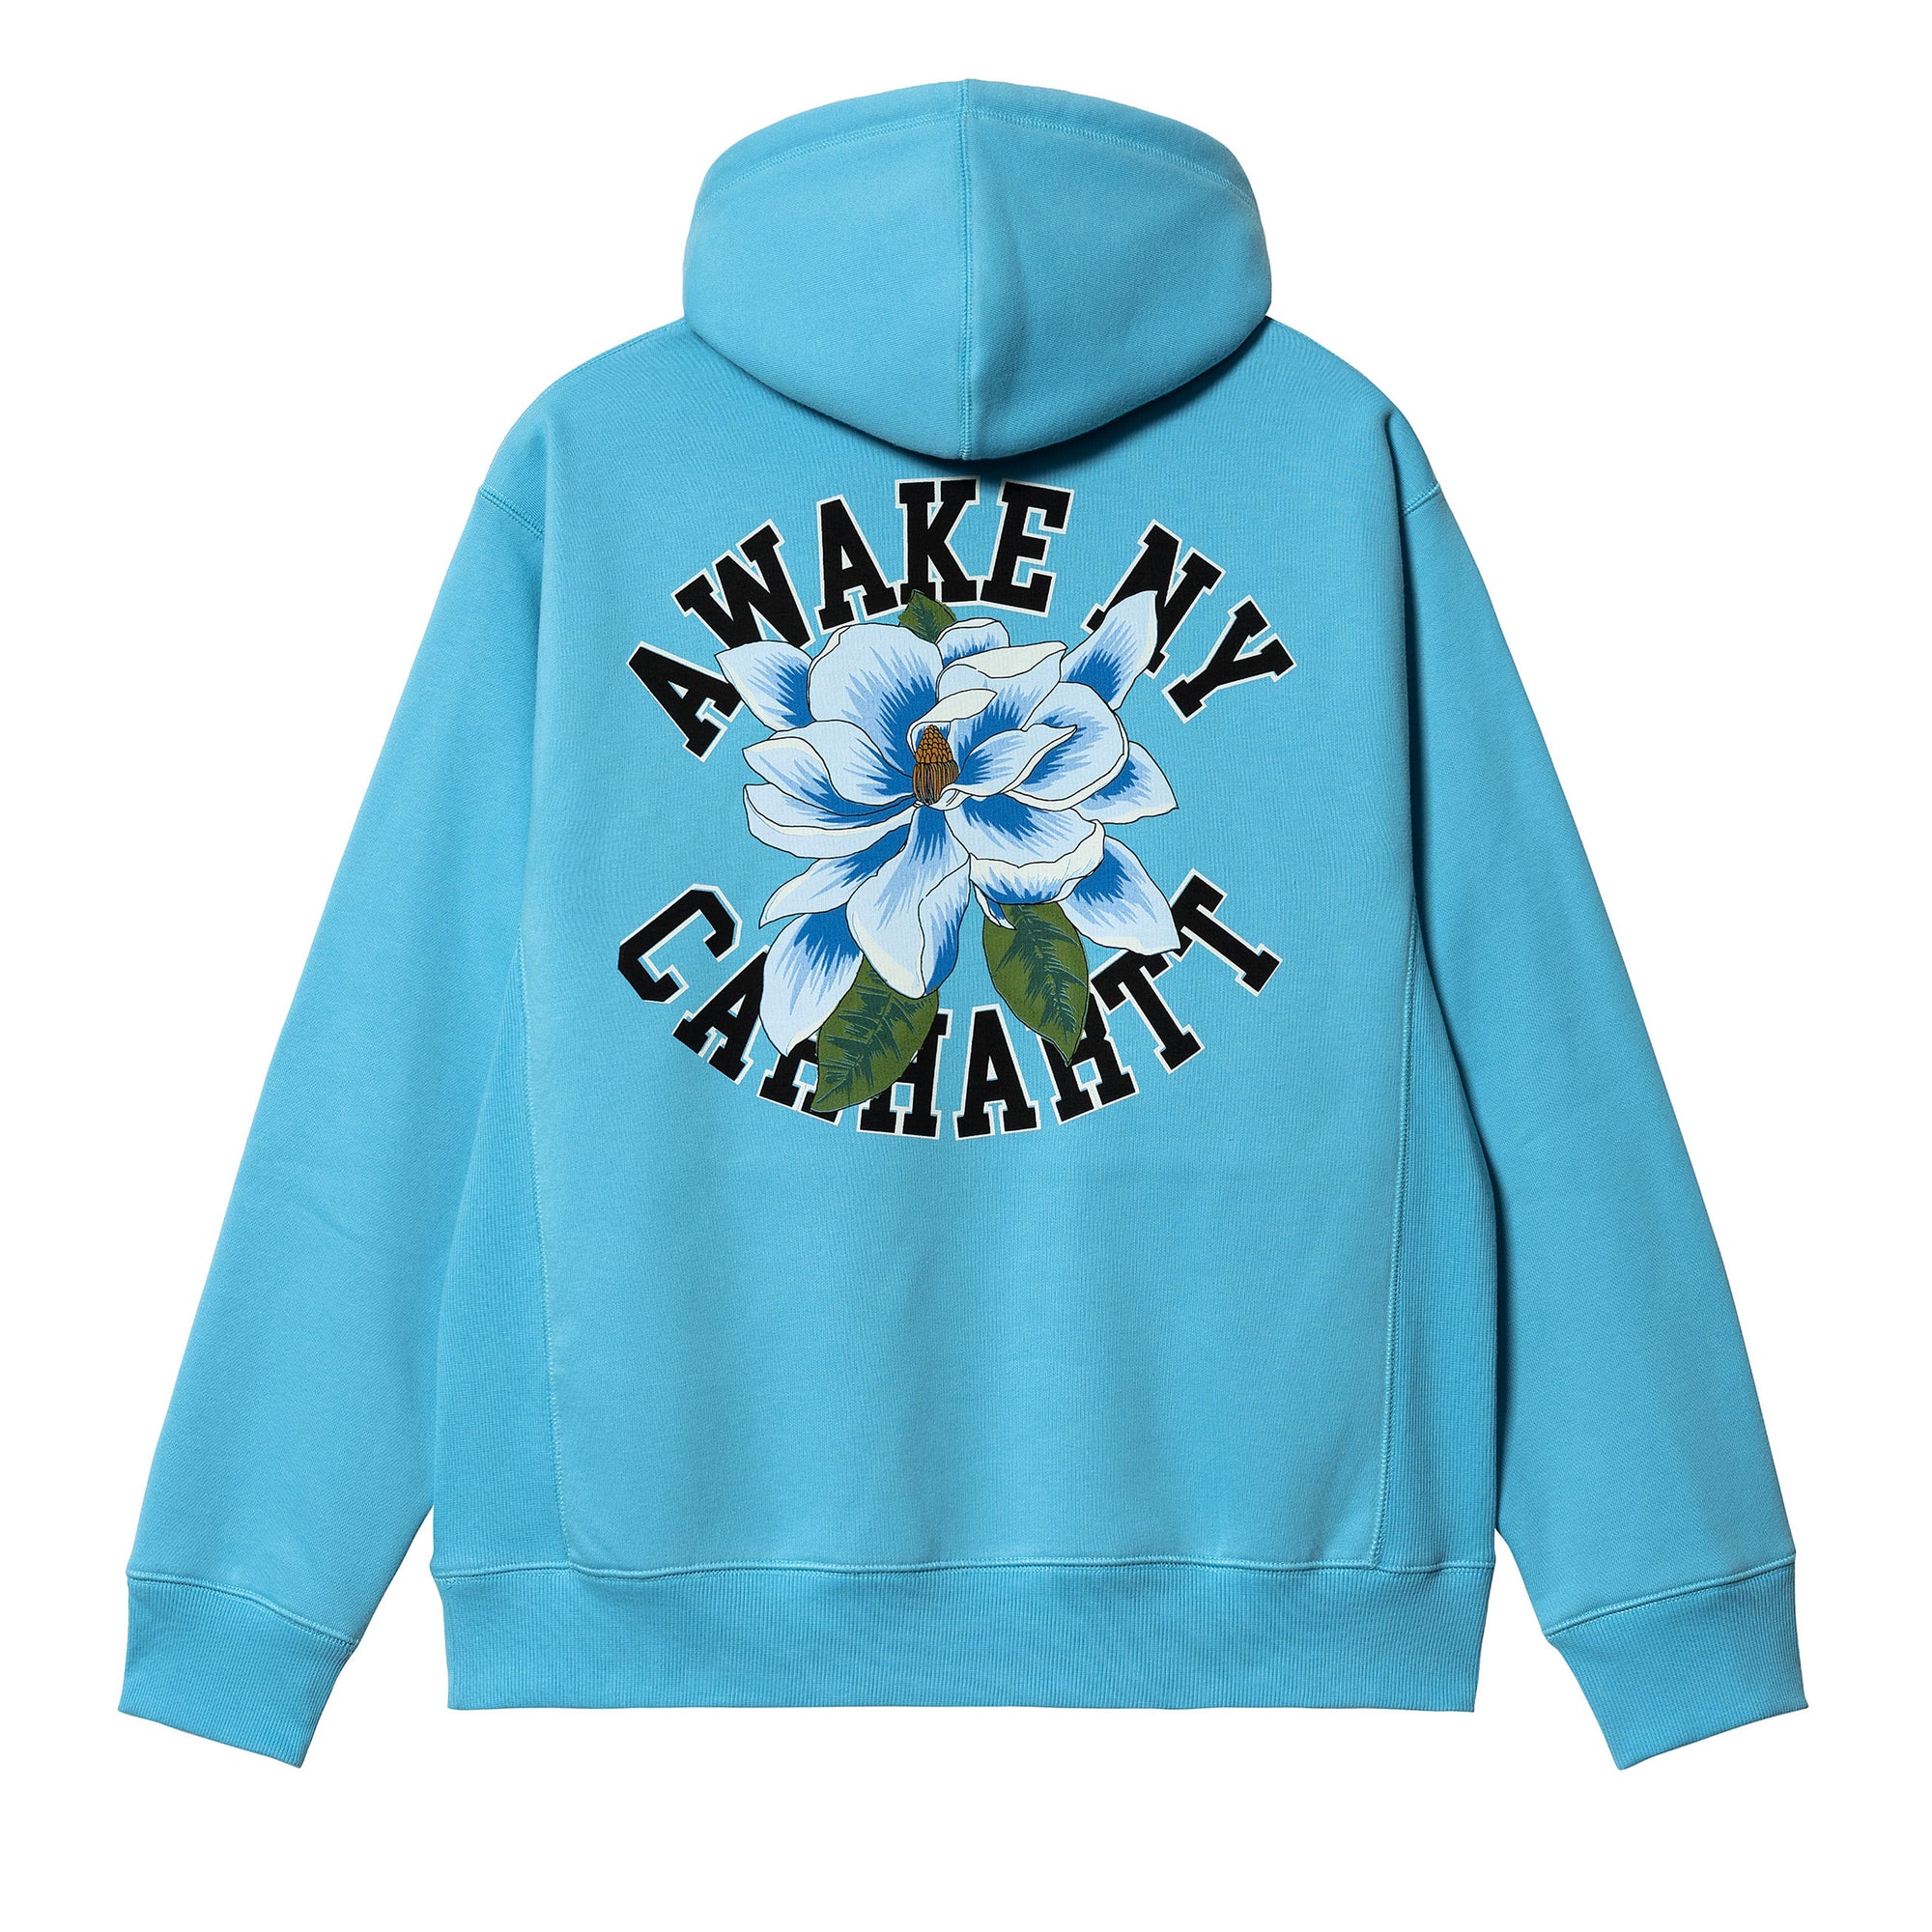 Awake NY x Carhartt WIP Printed Hoodie - Wax – Kith